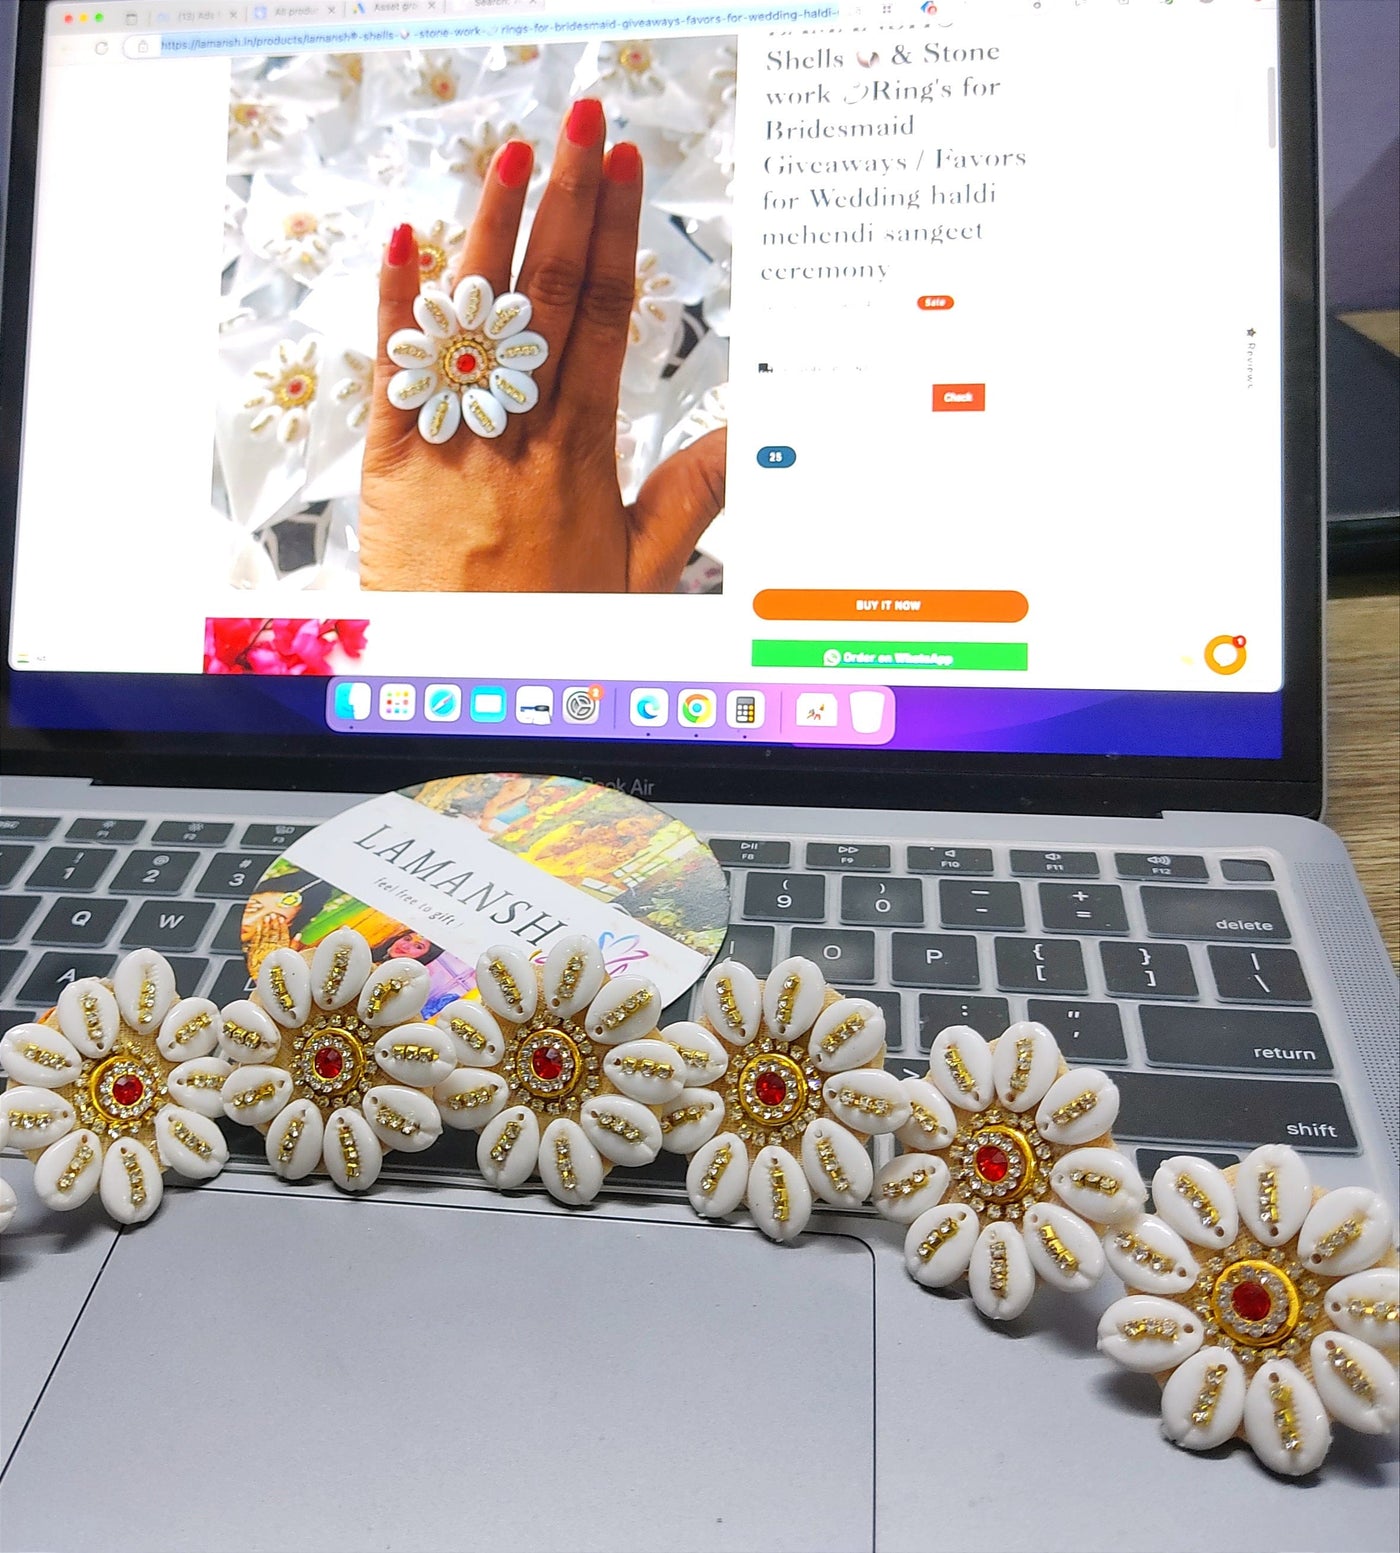 LAMANSH Floral 🌺 Giveaways LAMANSH® Shells 🐚 & Stone work 💍Ring's for Bridesmaid Giveaways / Favors for Wedding haldi mehendi sangeet ceremony